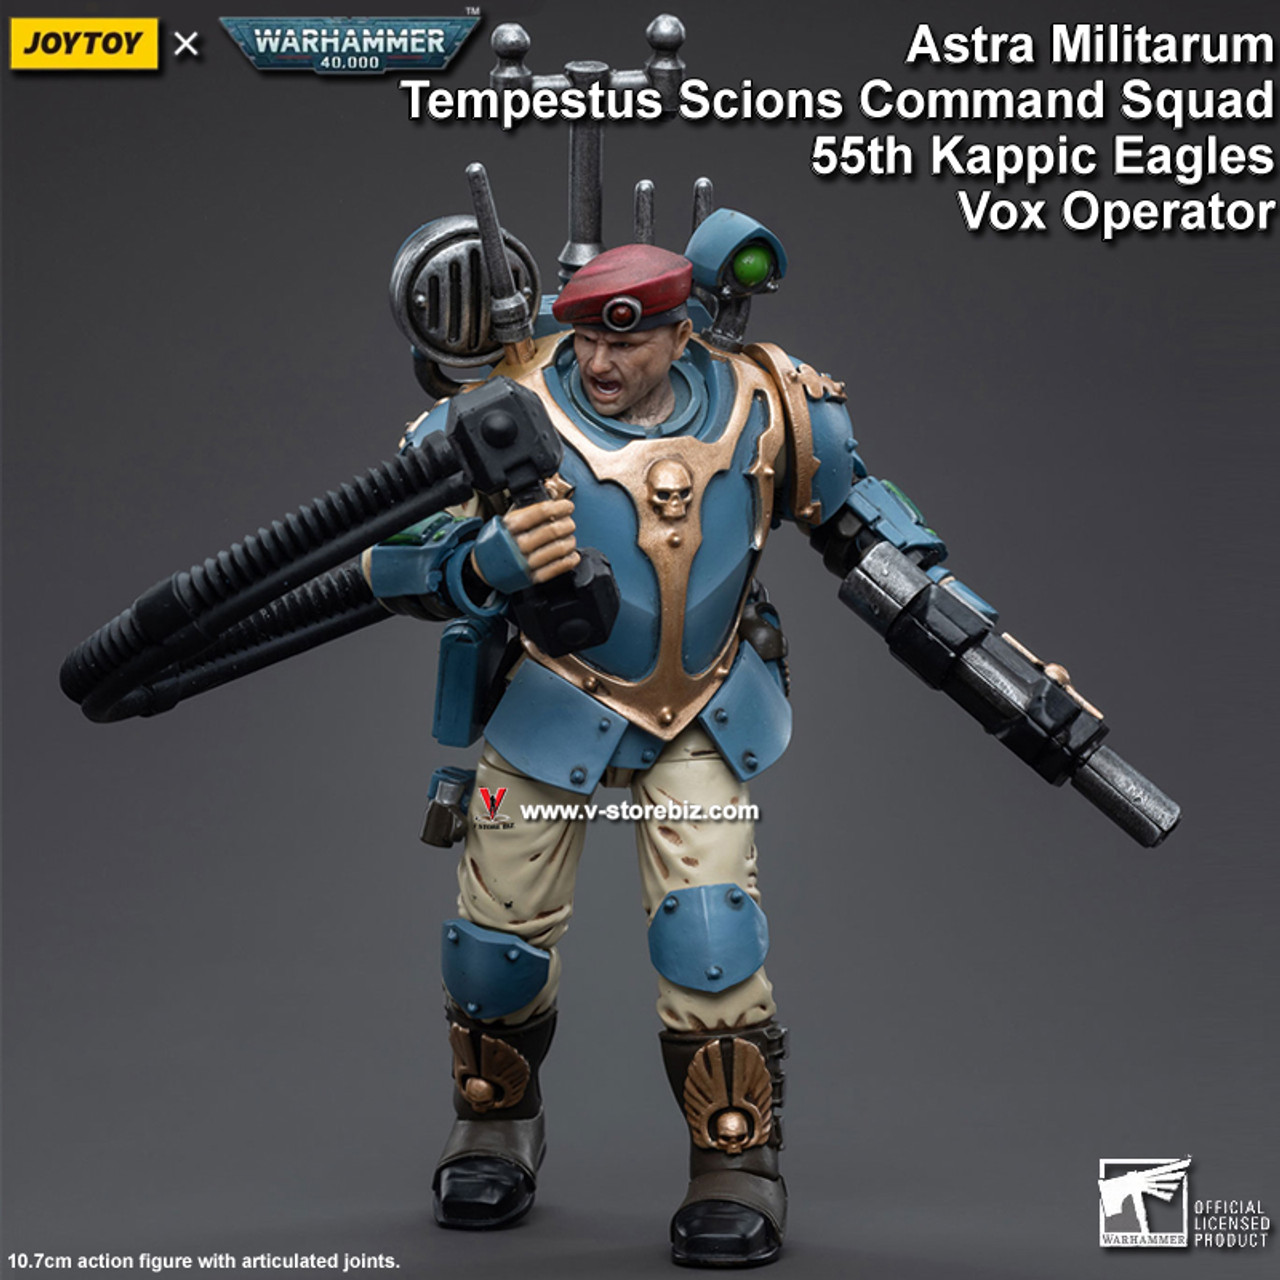 Warhammer 40K Astra Militarum Tempestus Scions Command Squad 55th Kappic Eagles Medic 1/18 Scale Figure